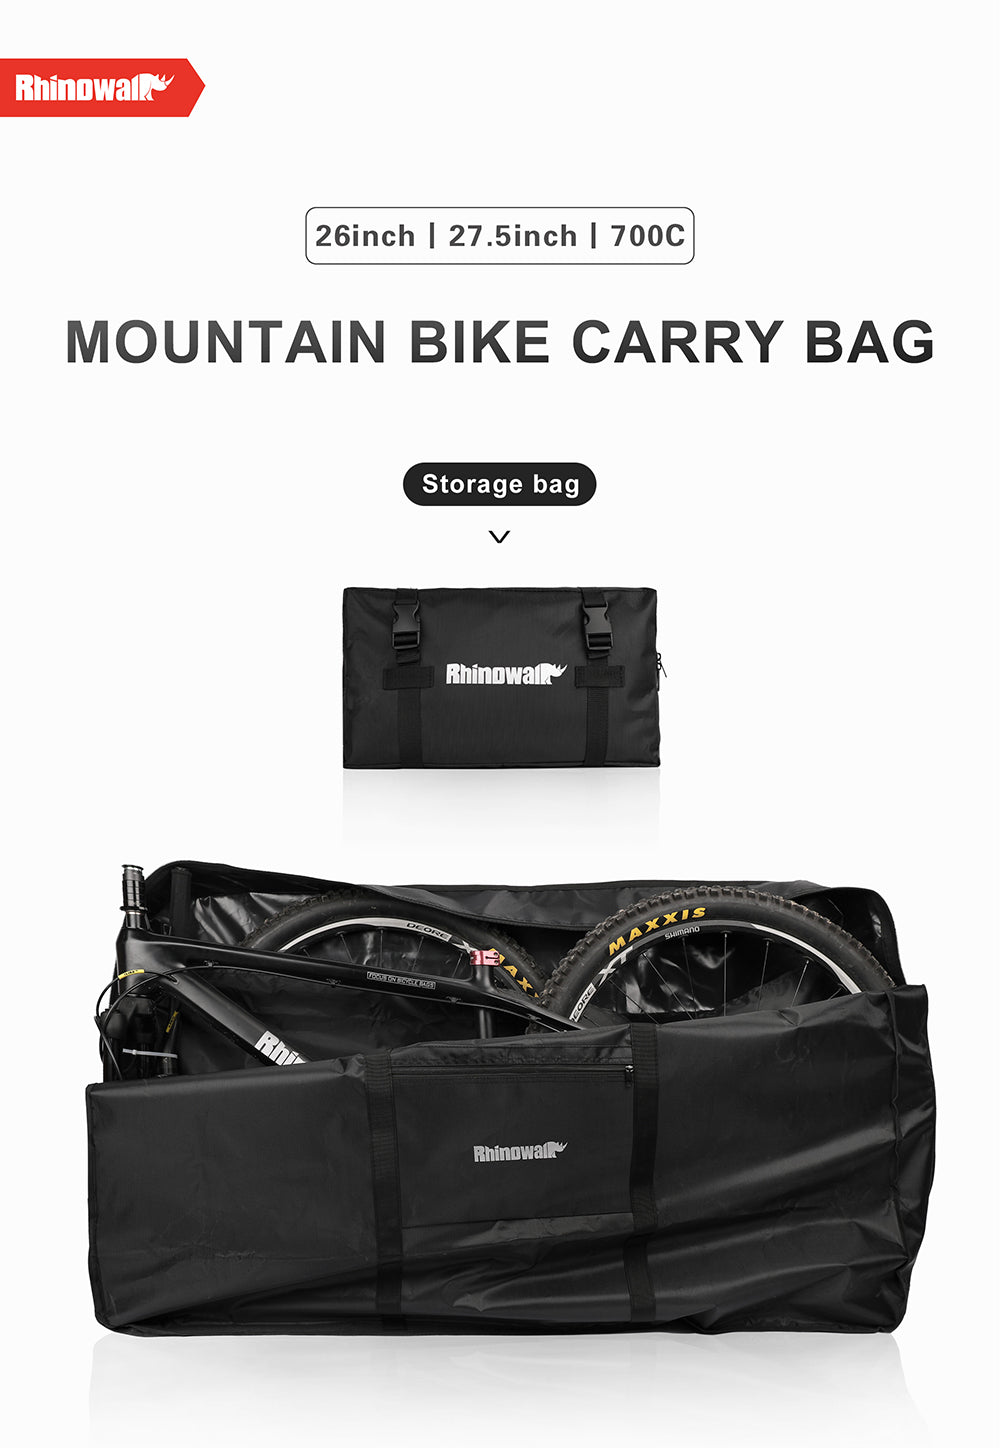 Rhinowalk Bike Carrying Bag for 26 to 27.5 inch MTB Mountain Bike/700C Road  Bike Transport Luggage Travel Case : : Sports & Outdoors